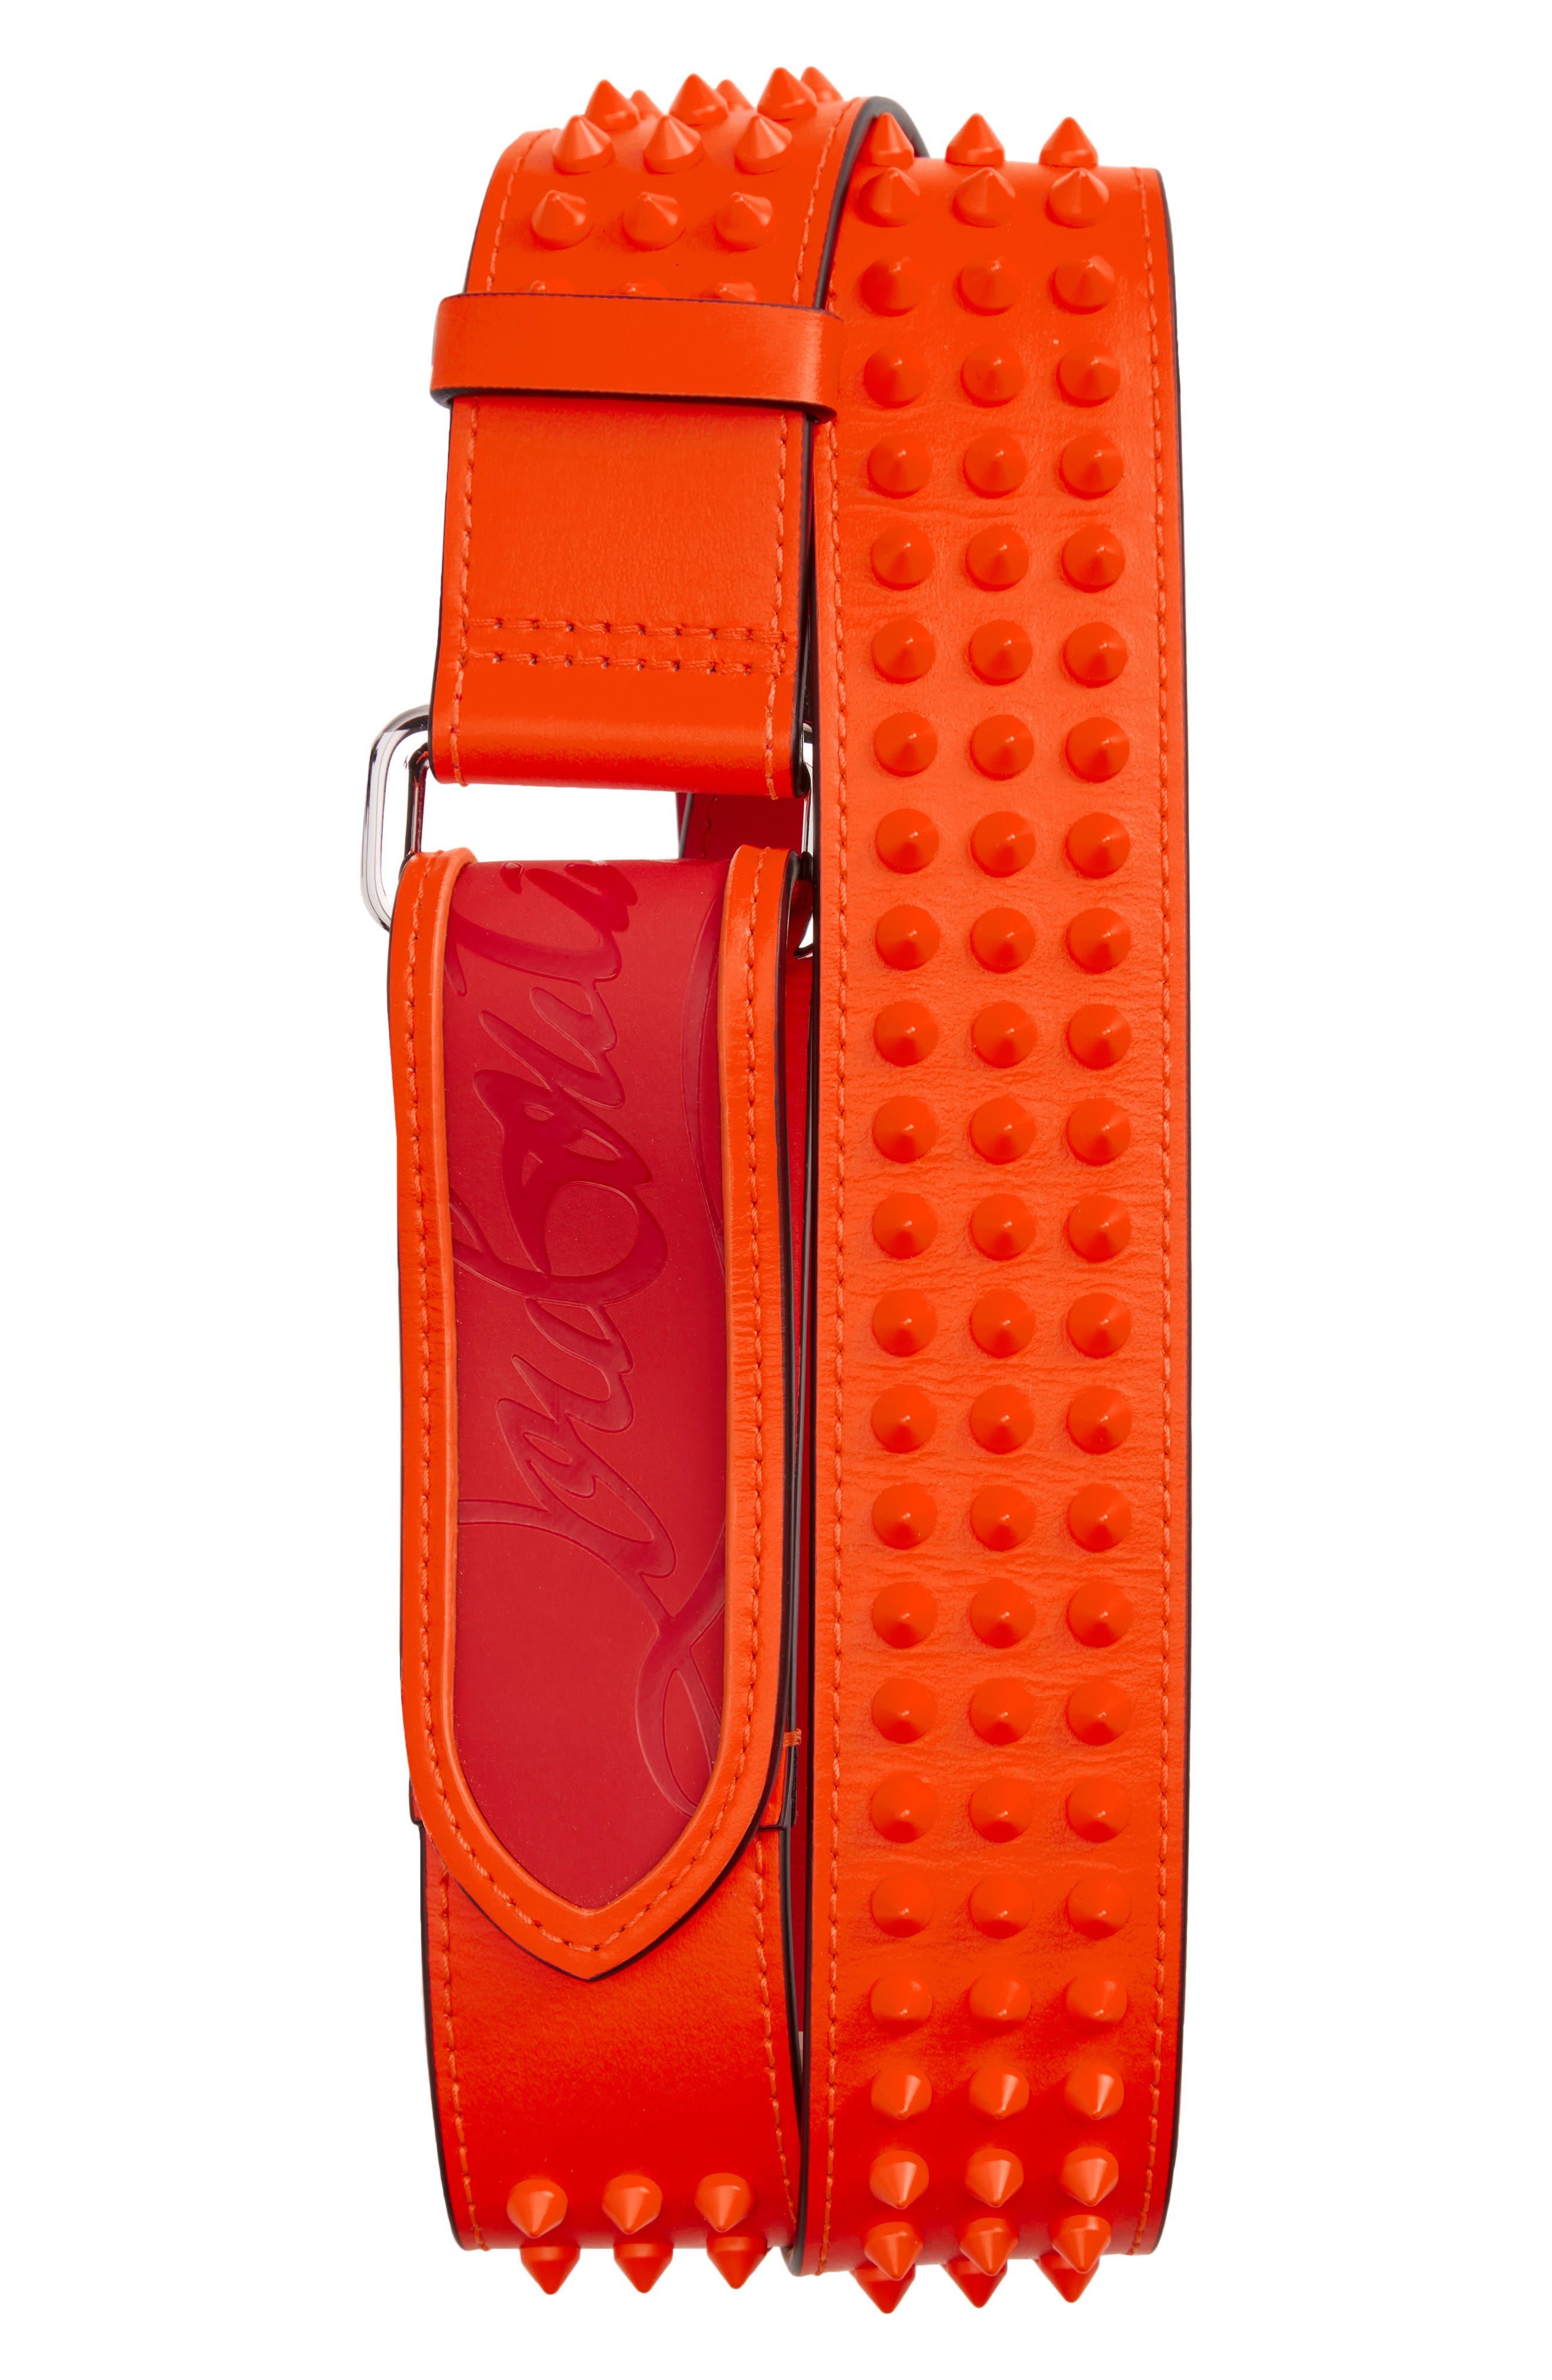 Christian Louboutin Men's Patent Leather Spike Loubi Belt